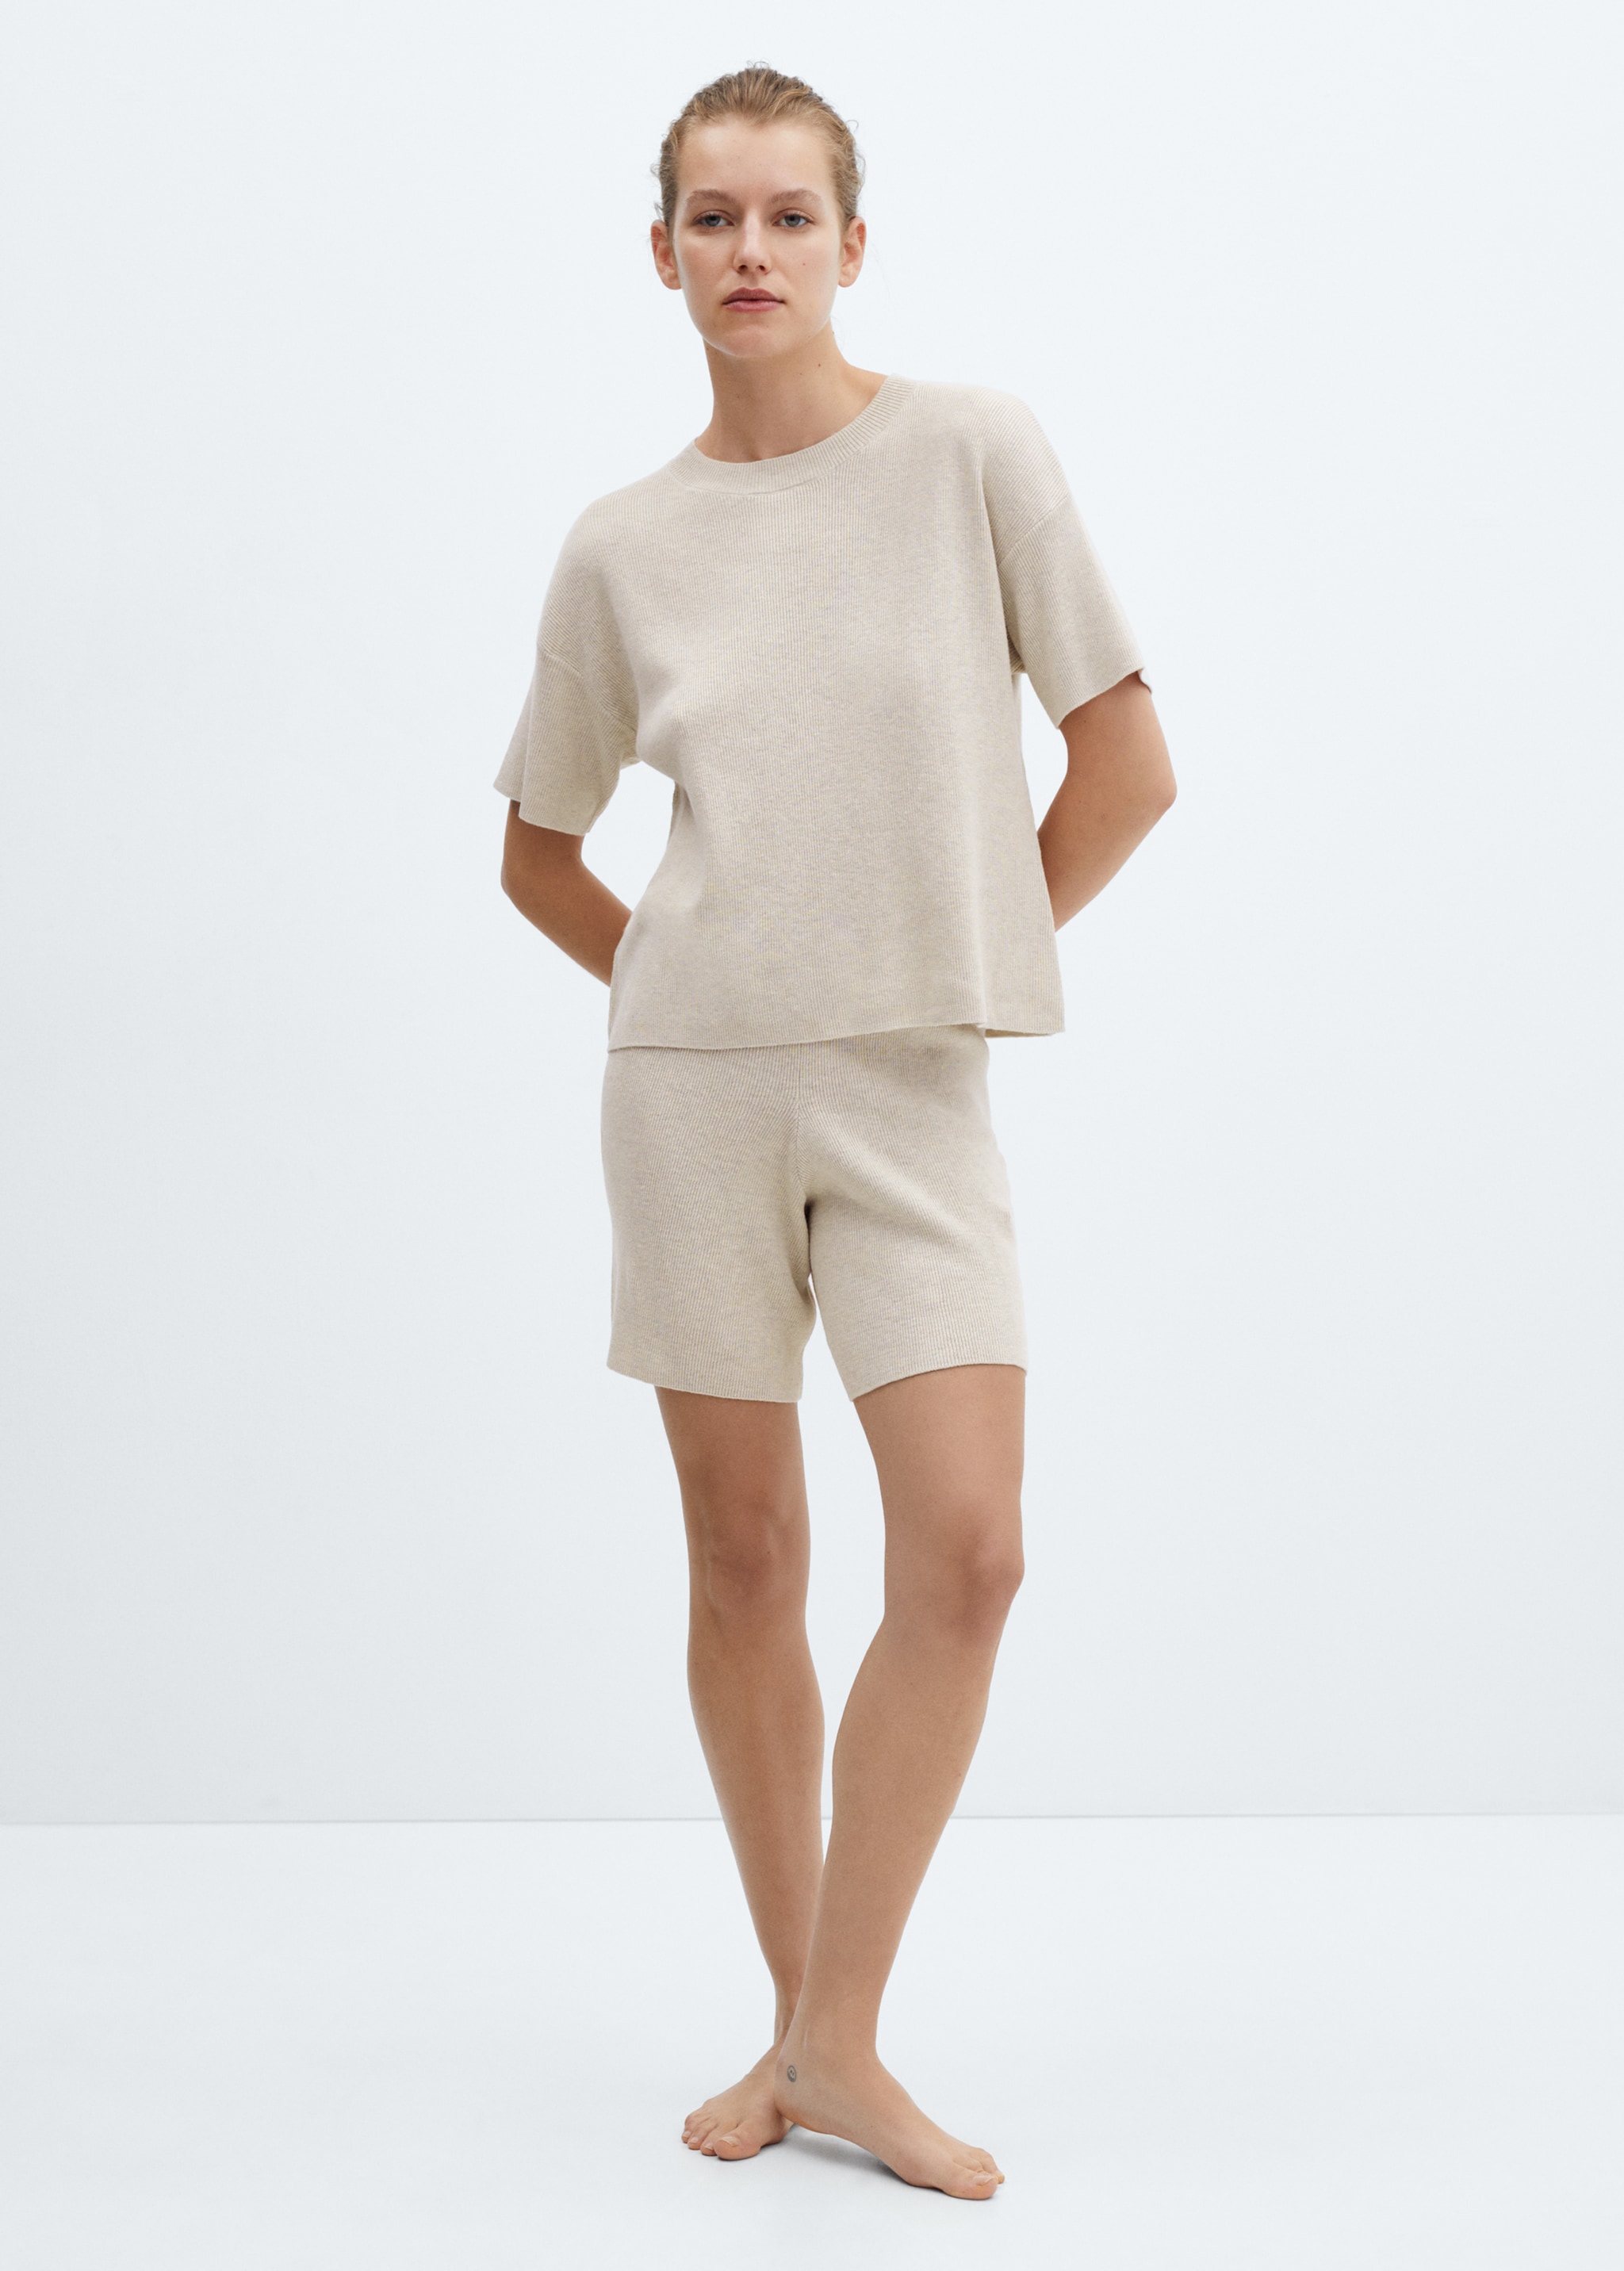 Cotton linen-blend knit t-shirt - General plane